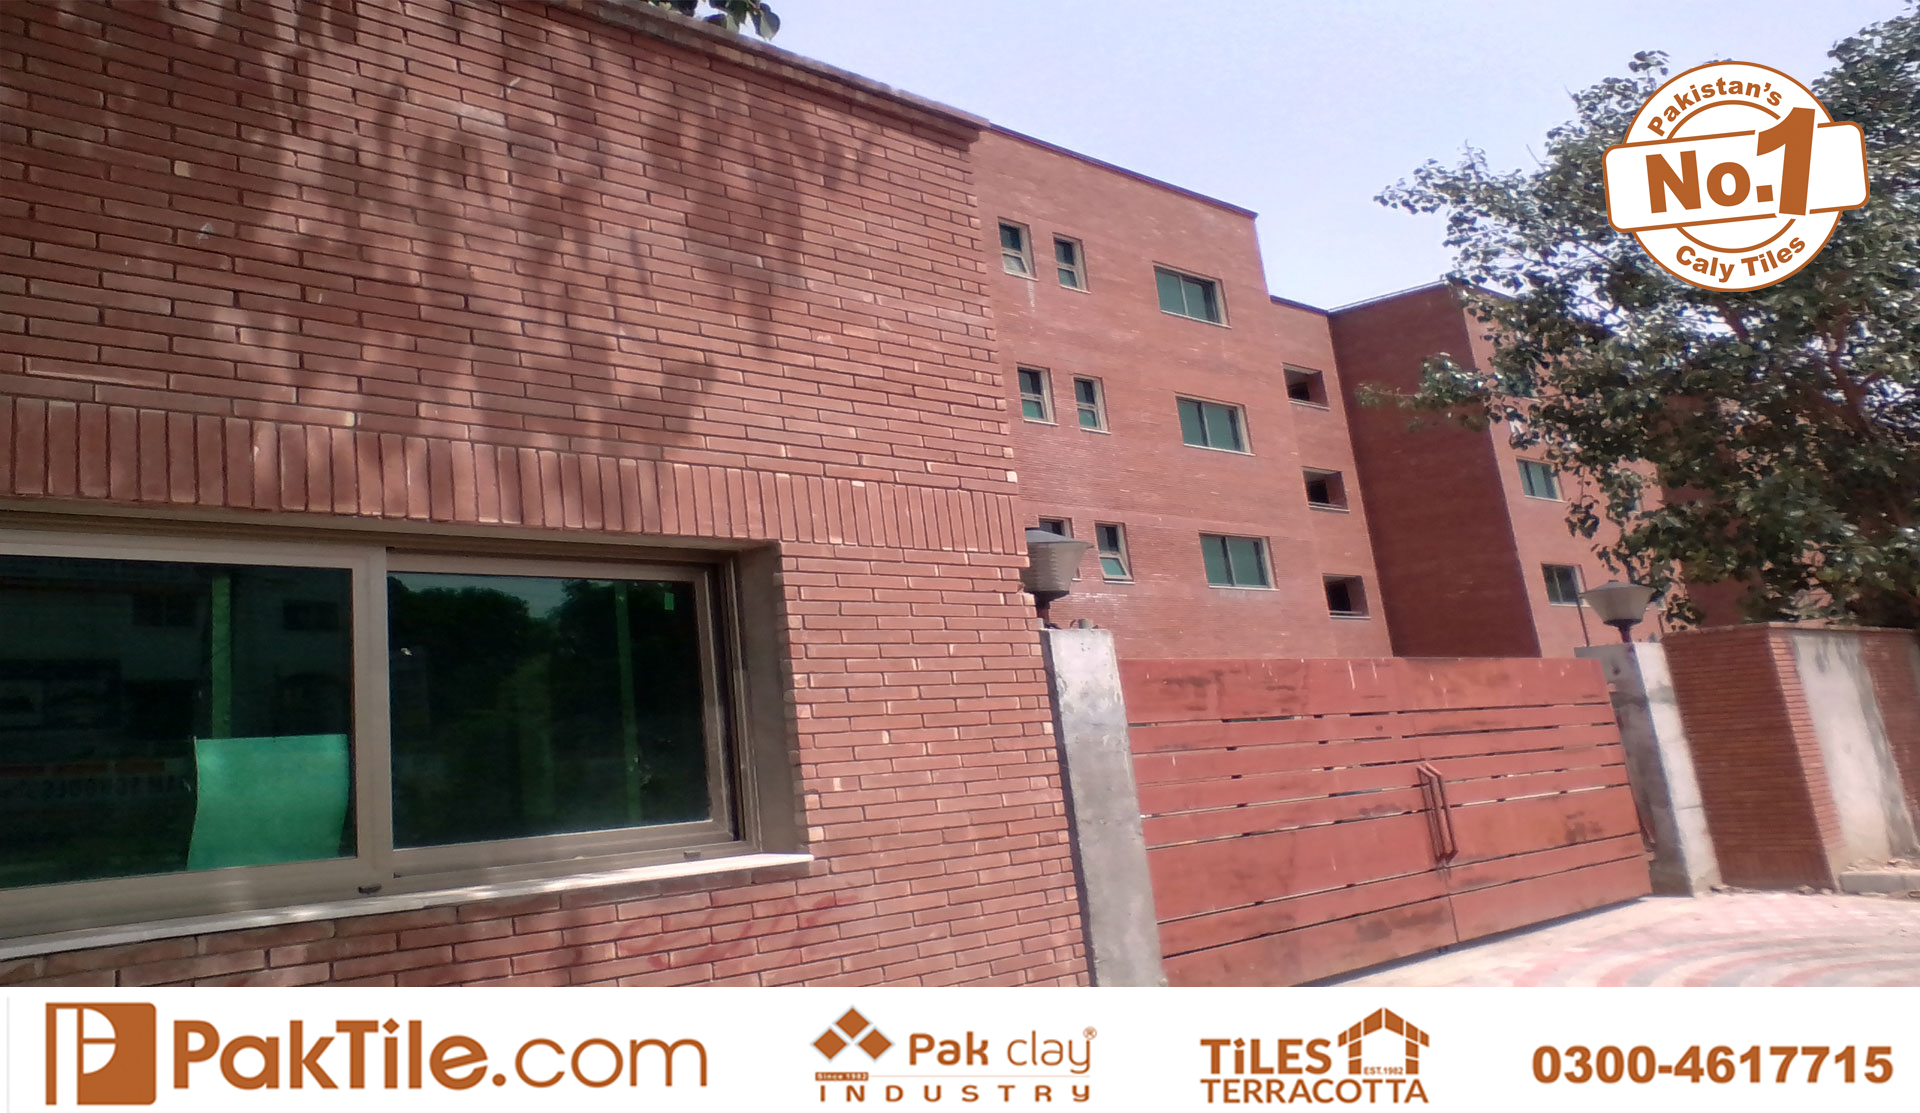 Pak Clay Natural Terracotta Red Gutka Brick Tile Texture Rate in Lahore Pakistan Facade Tiles Photos